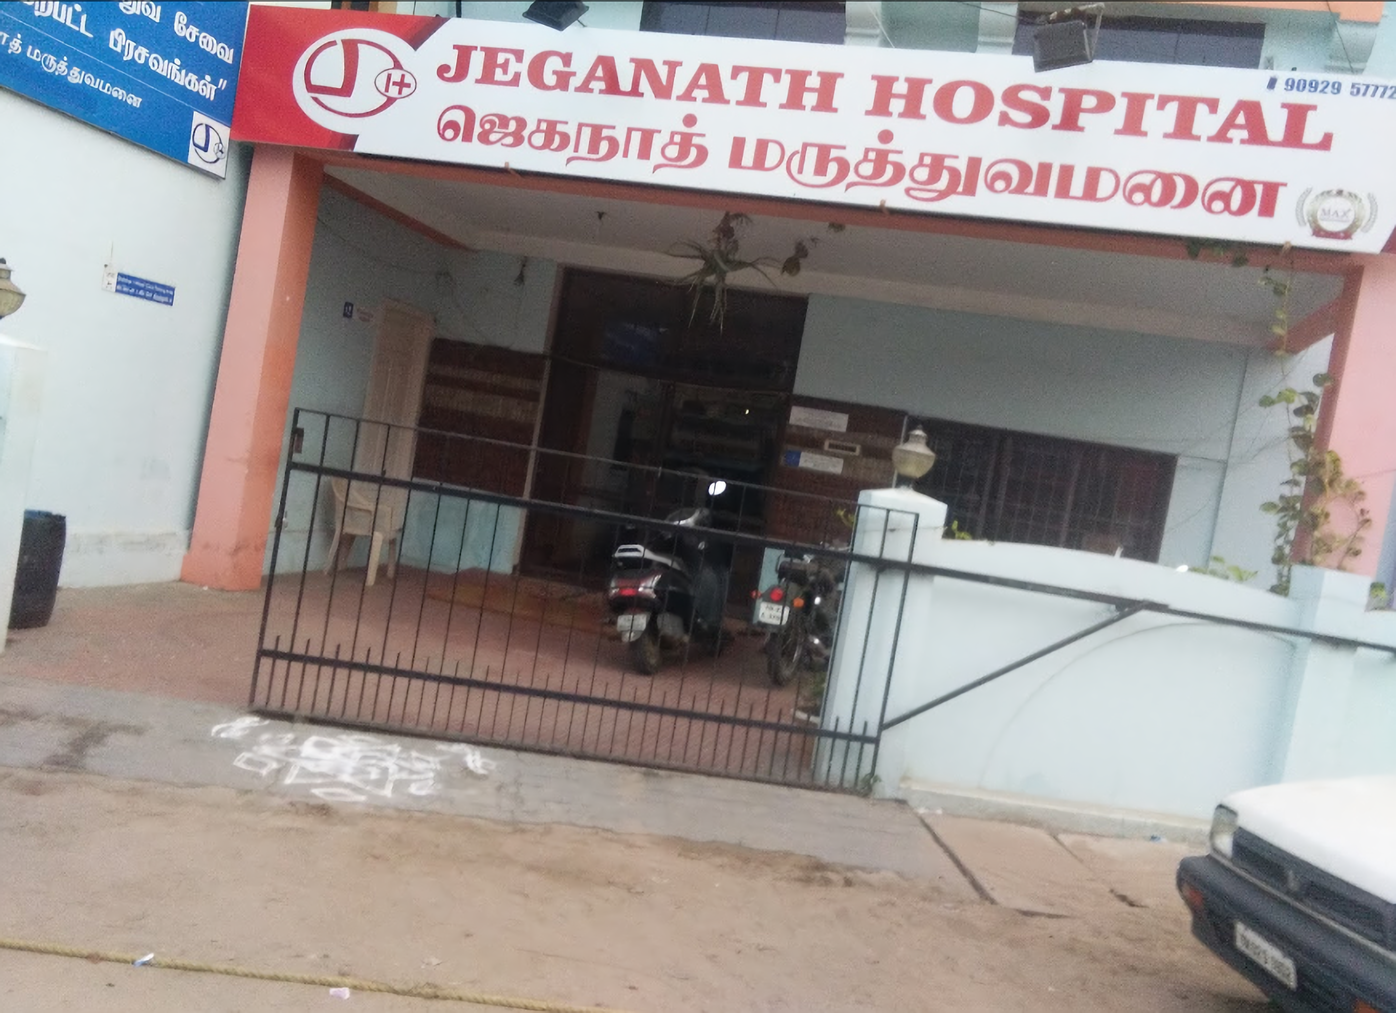 Jeganath Hospital